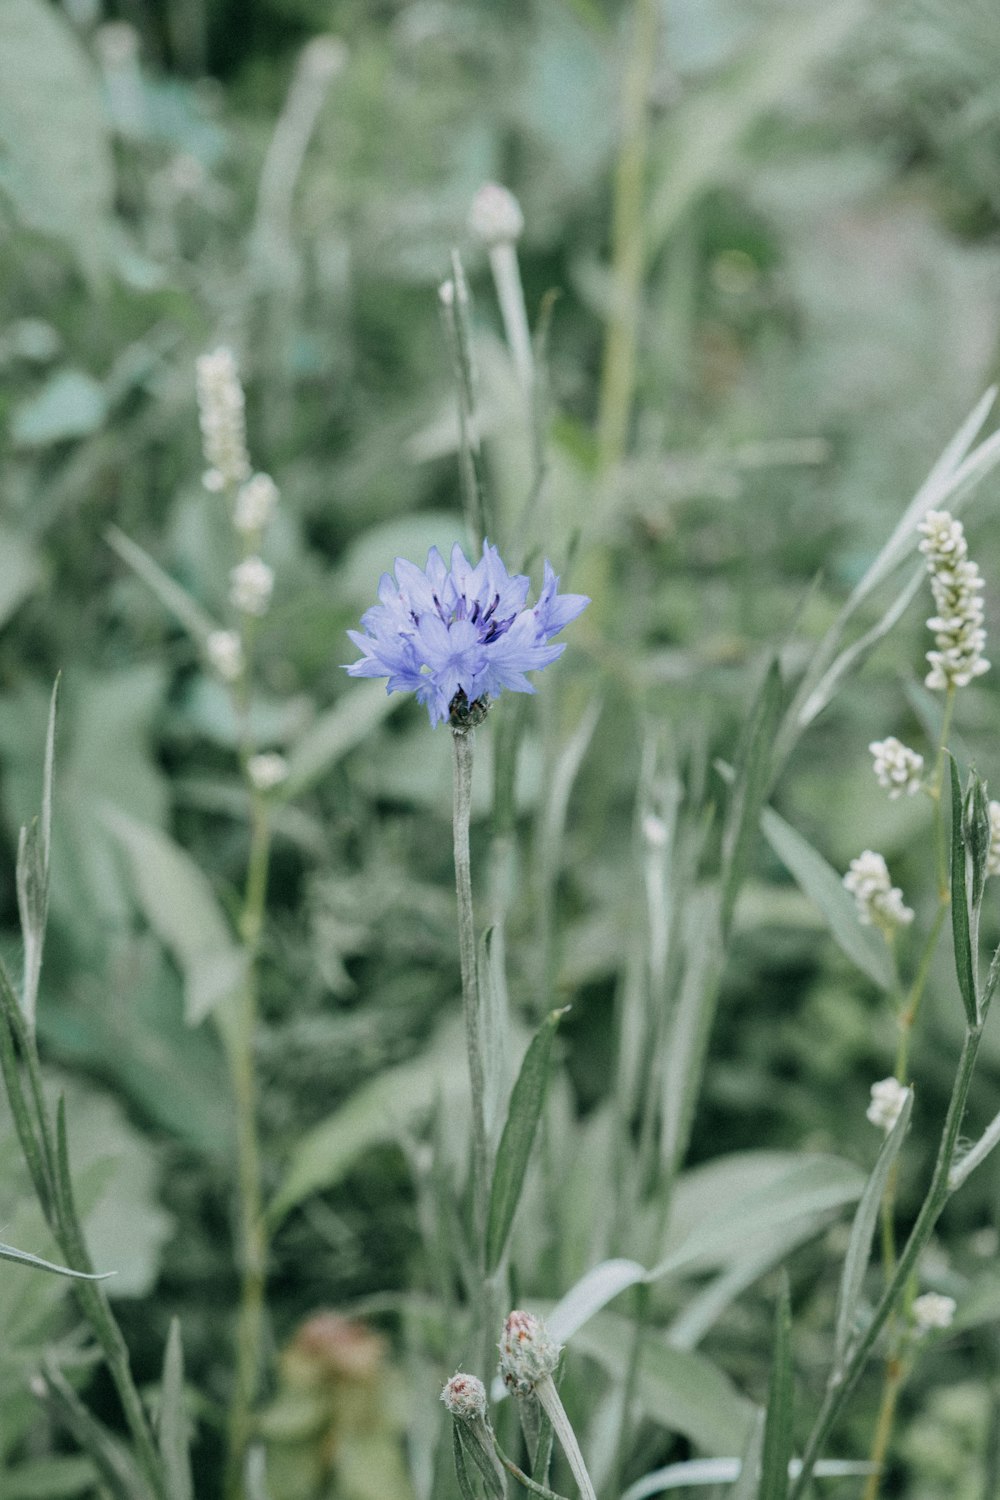 a blue flower in a field of grass